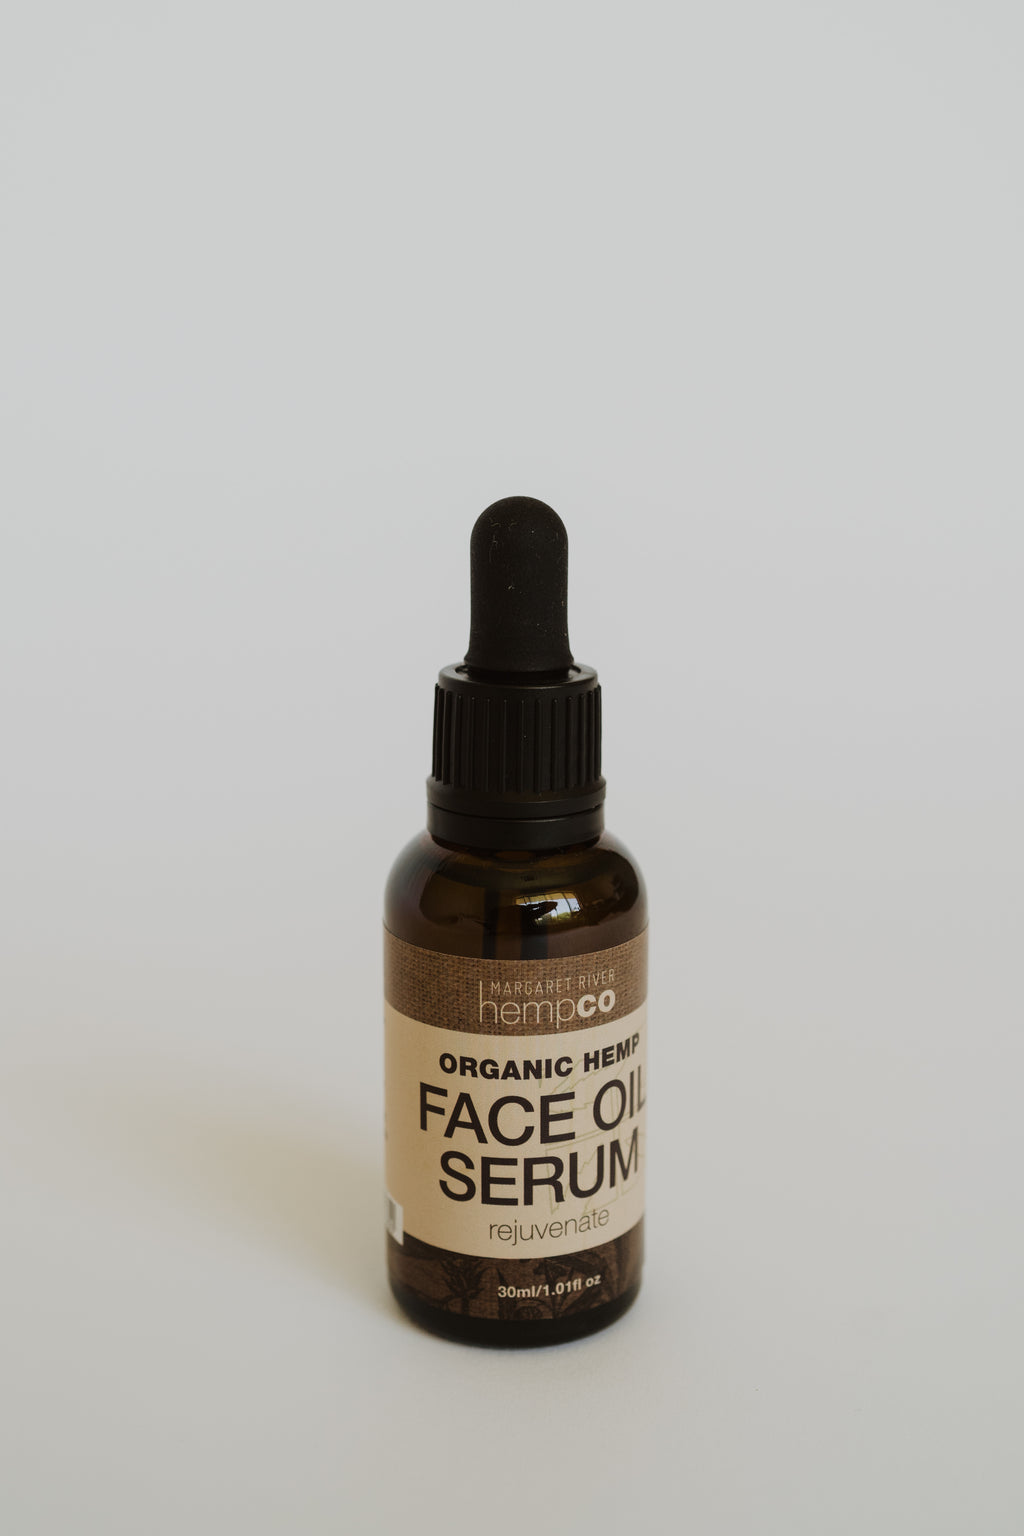 Organic Hemp Seed Oil Face Serum - 30ml